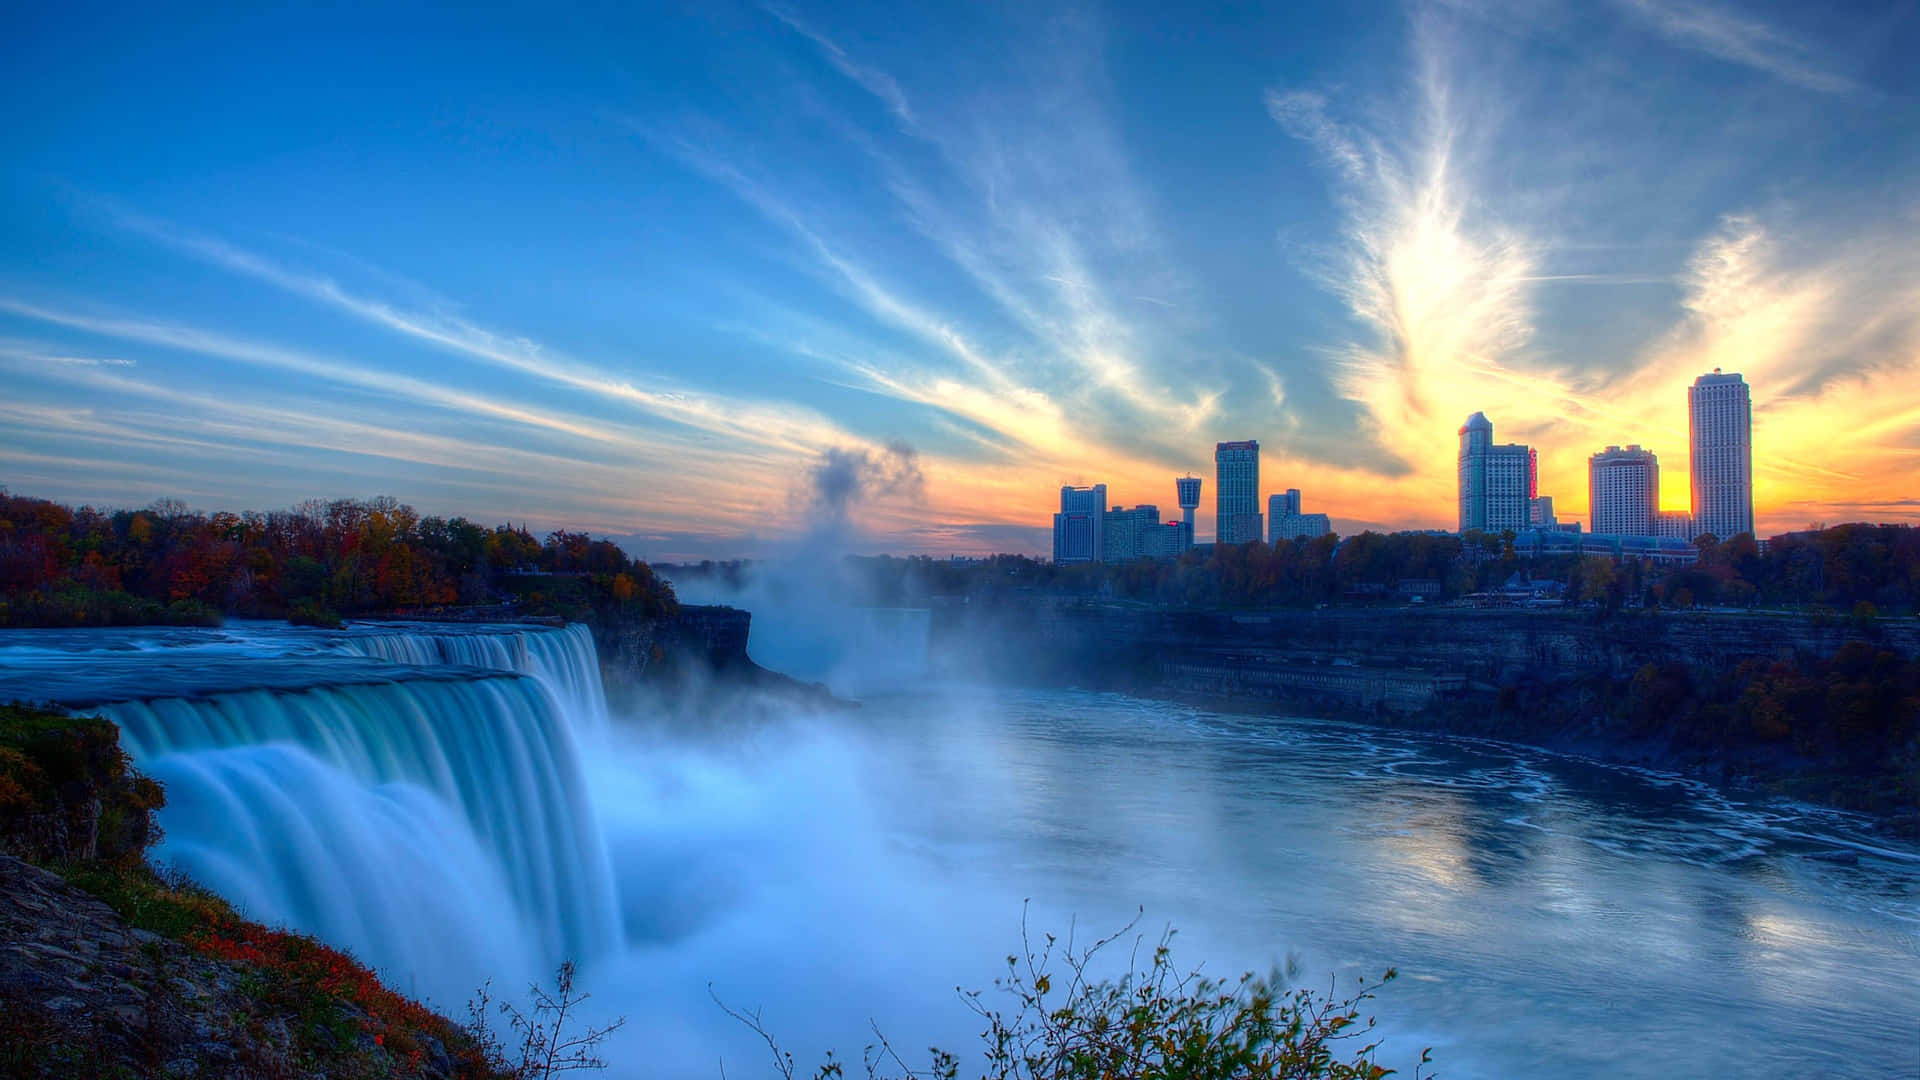 Marvelous Niagara Falls, Illuminated by the Sun